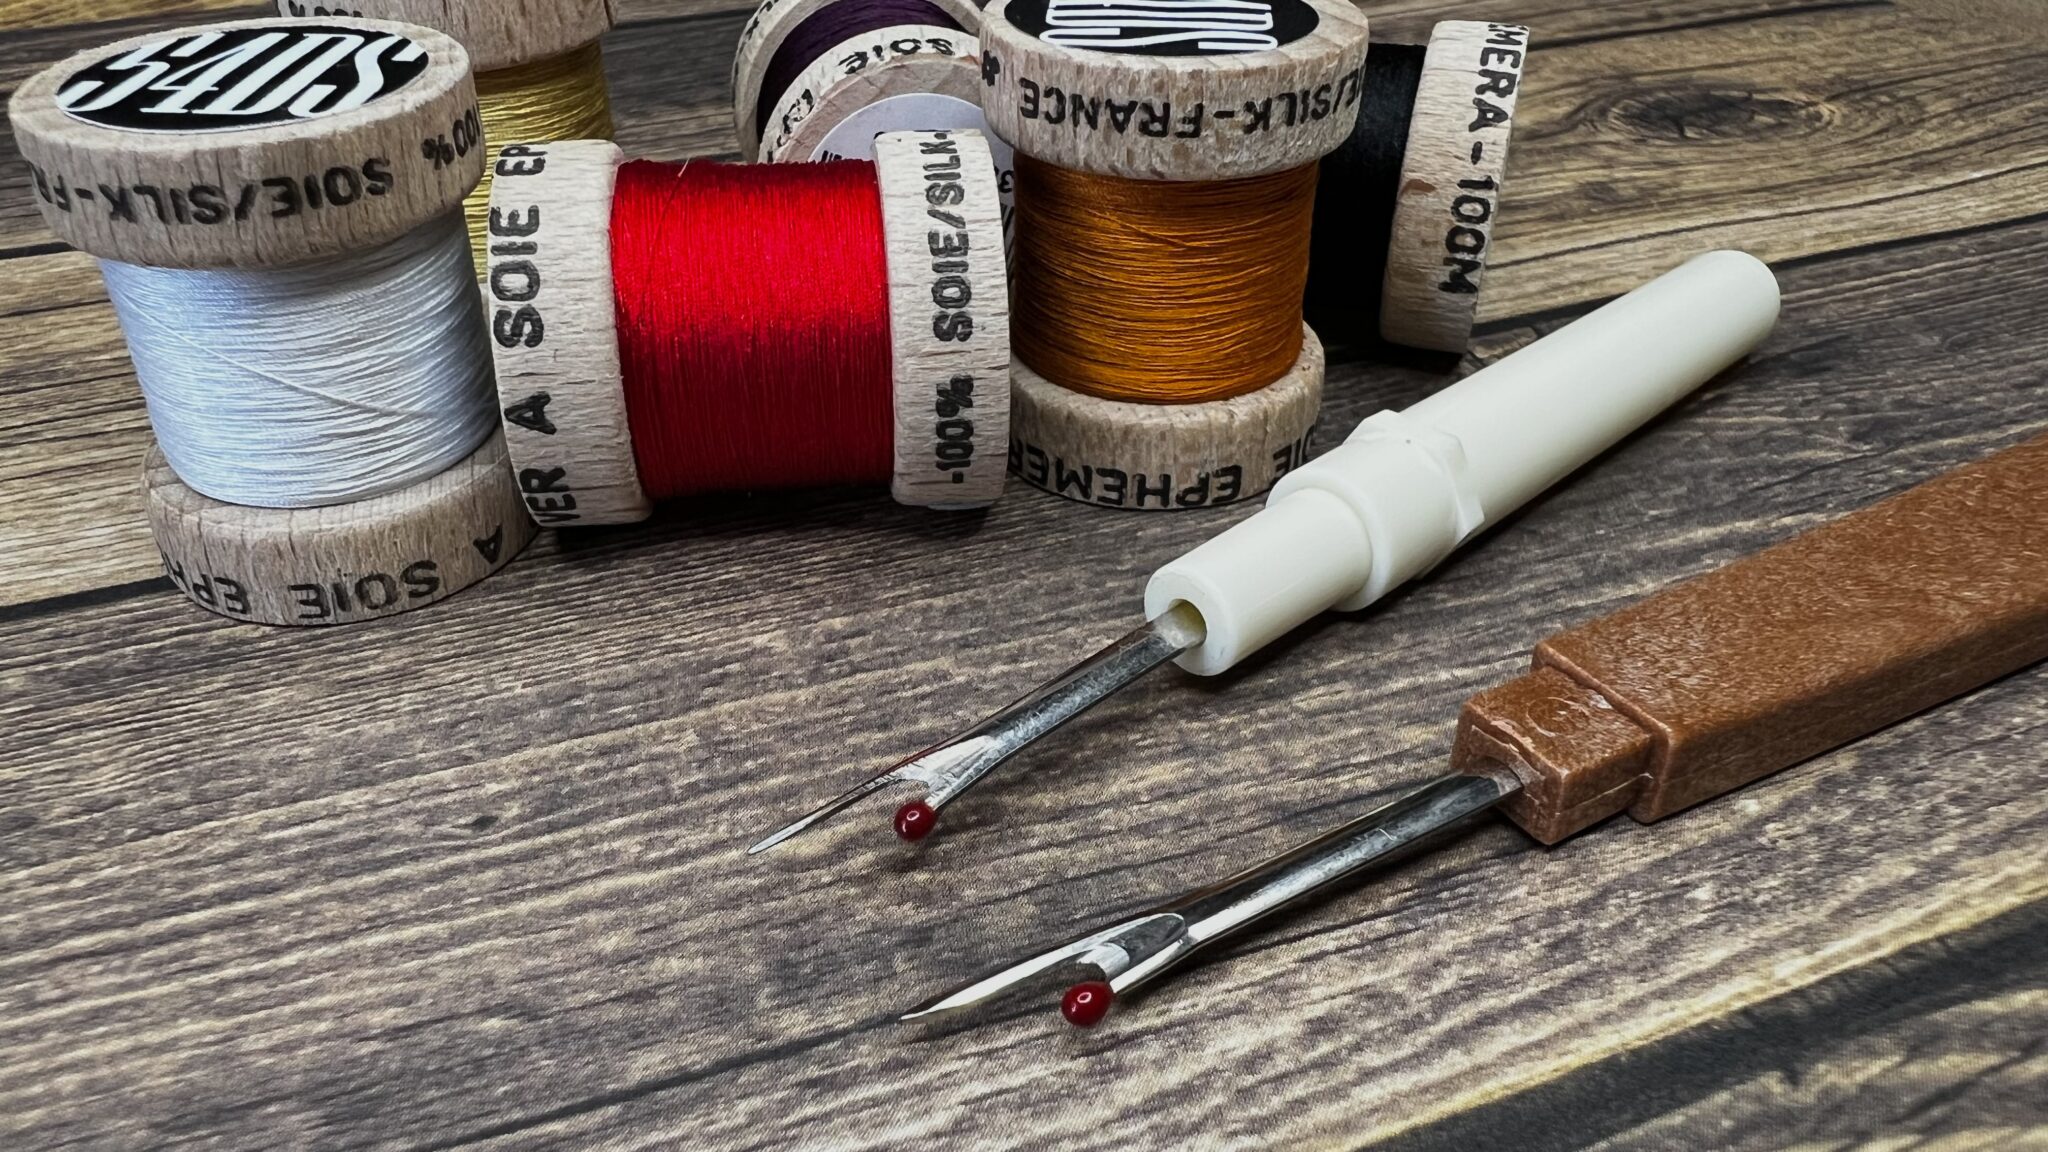 Stonfo Thread Cutter with Precision Bodkin, Buy Stonfo Fly Tying Tools  Online, Fly Tying Thread Cutters